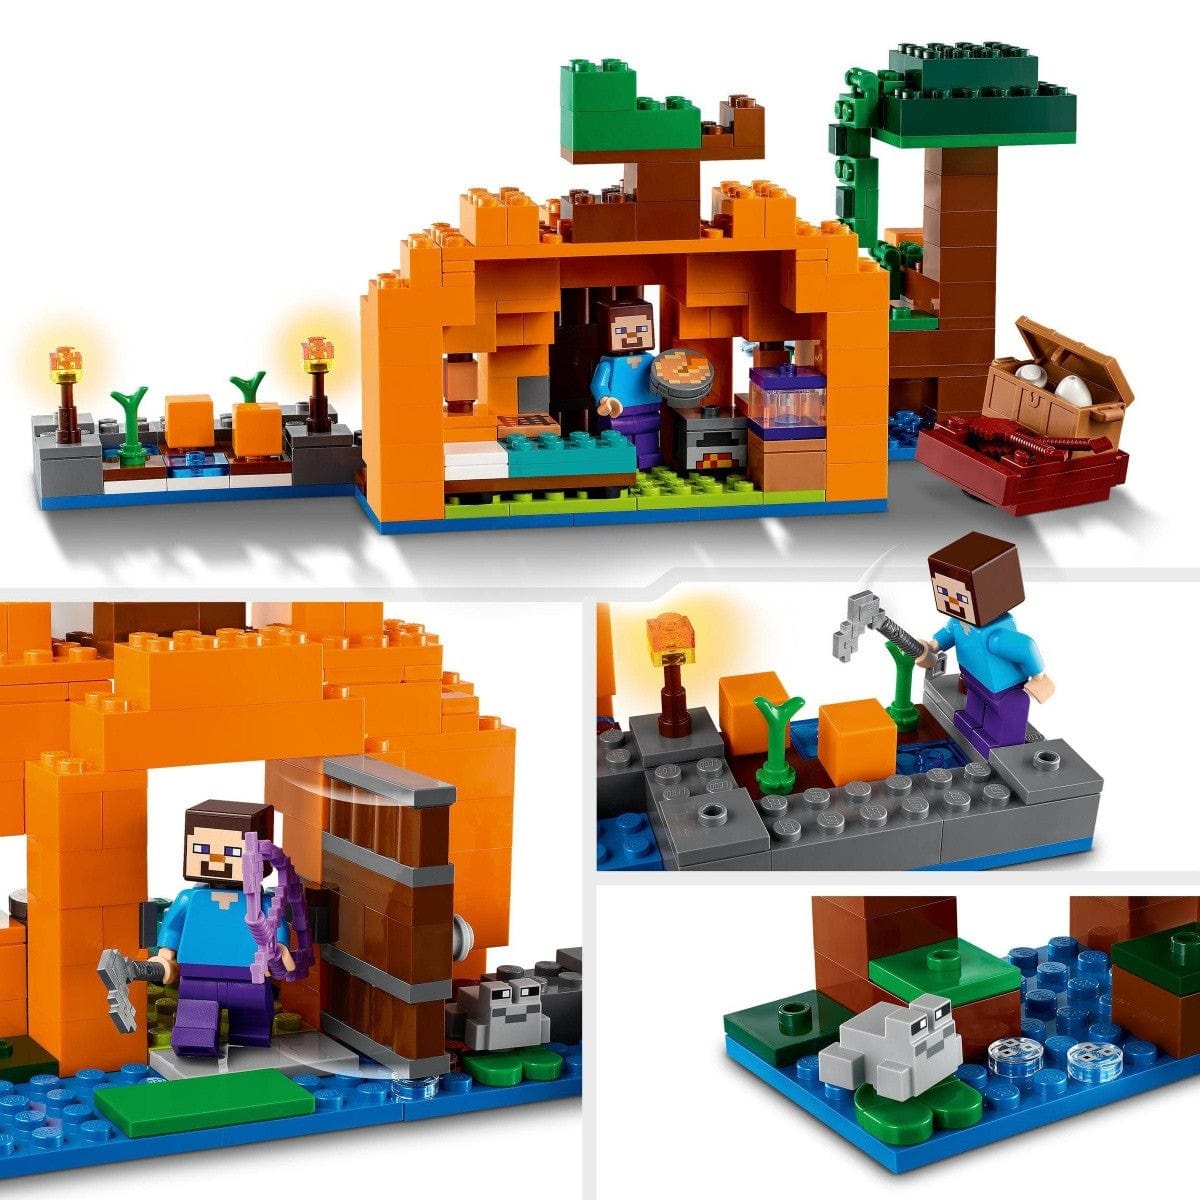 LEGO Minecraft The Pumpkin Farm Set with Steve Figure 21248